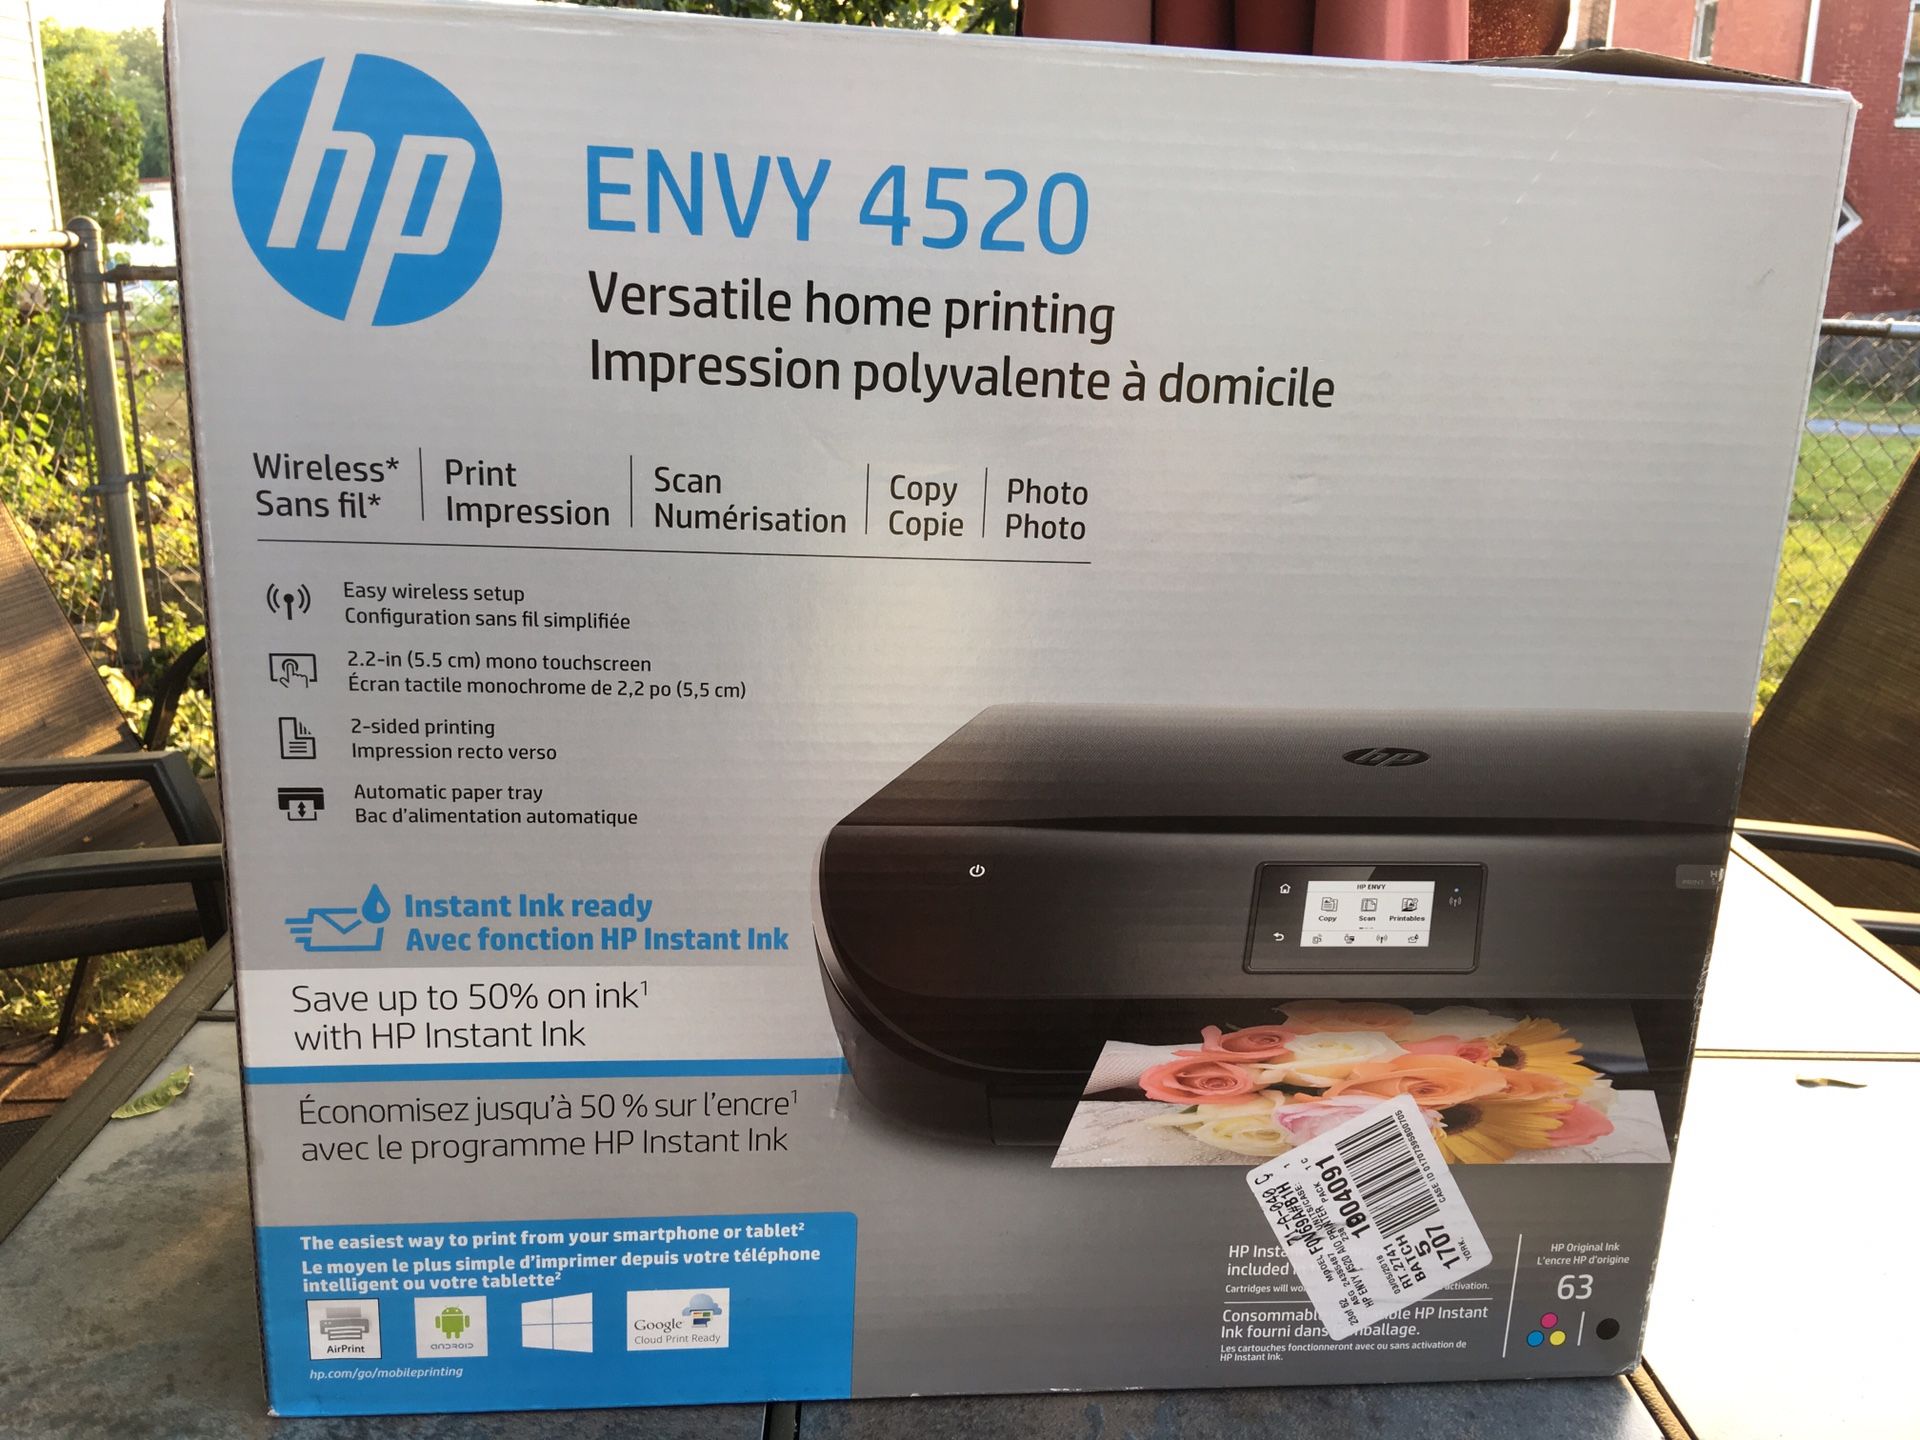 Hp Envy 4520 photo printer scanner copy